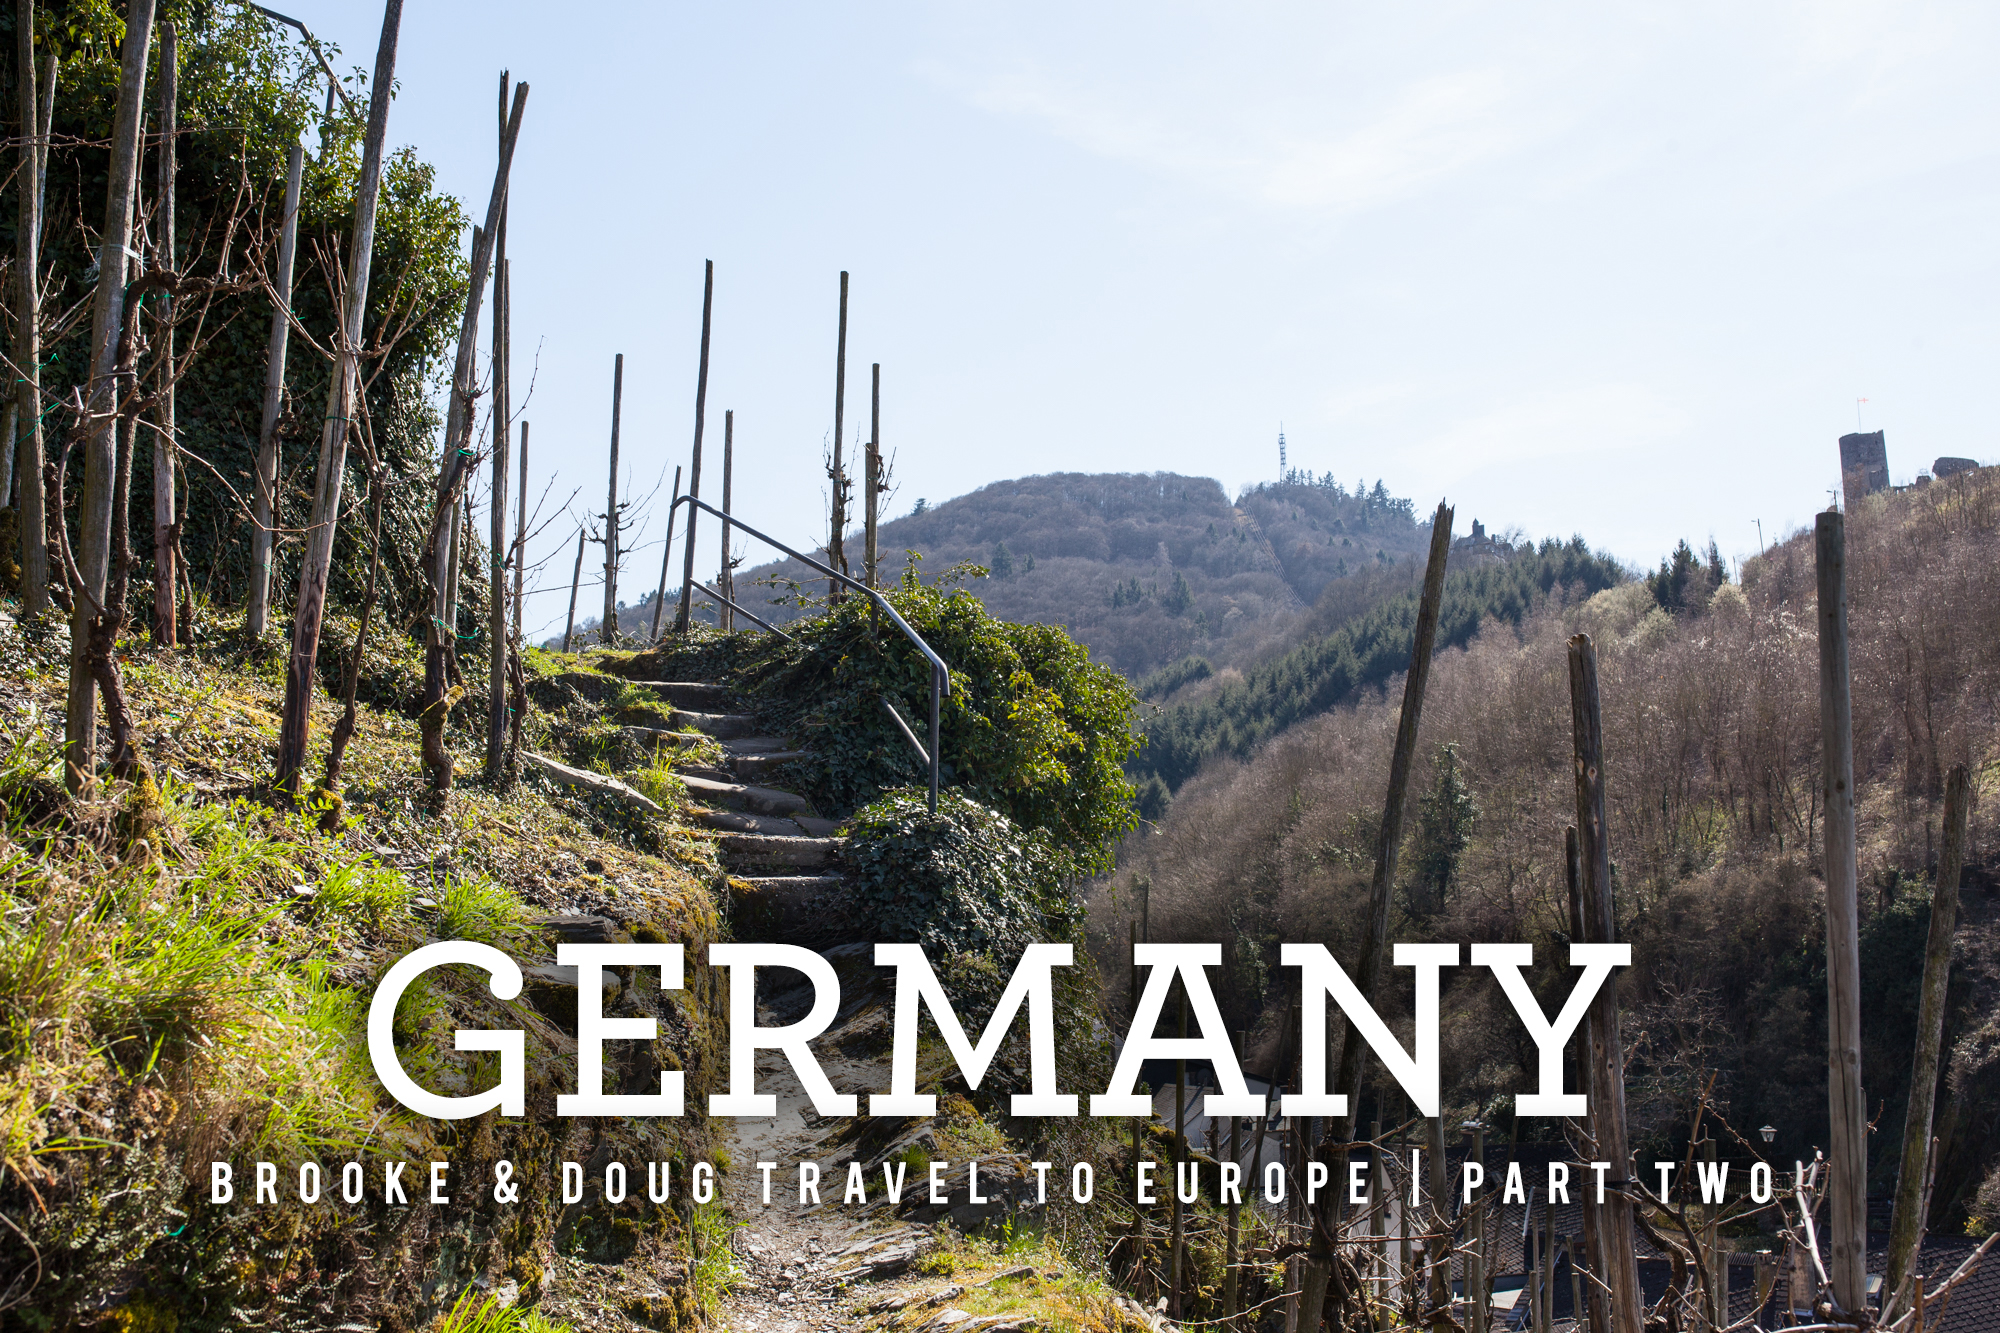 Brooke & Doug Travel to Europe | PART 1 - Germany